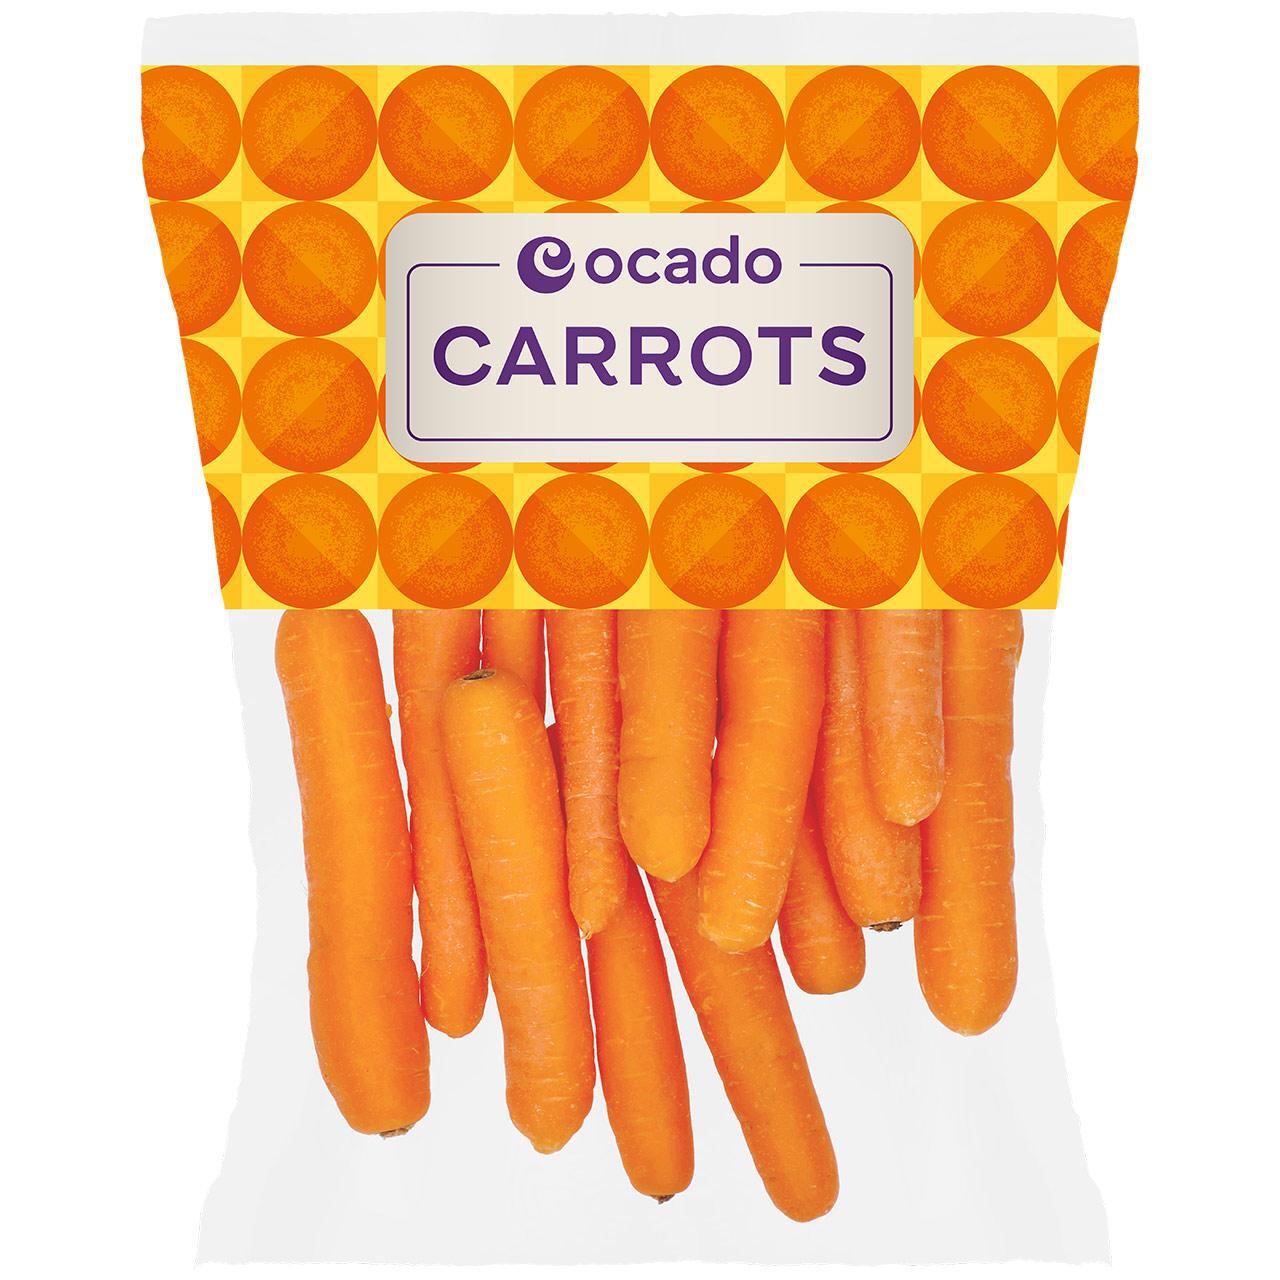 Ocado Carrots 1kg